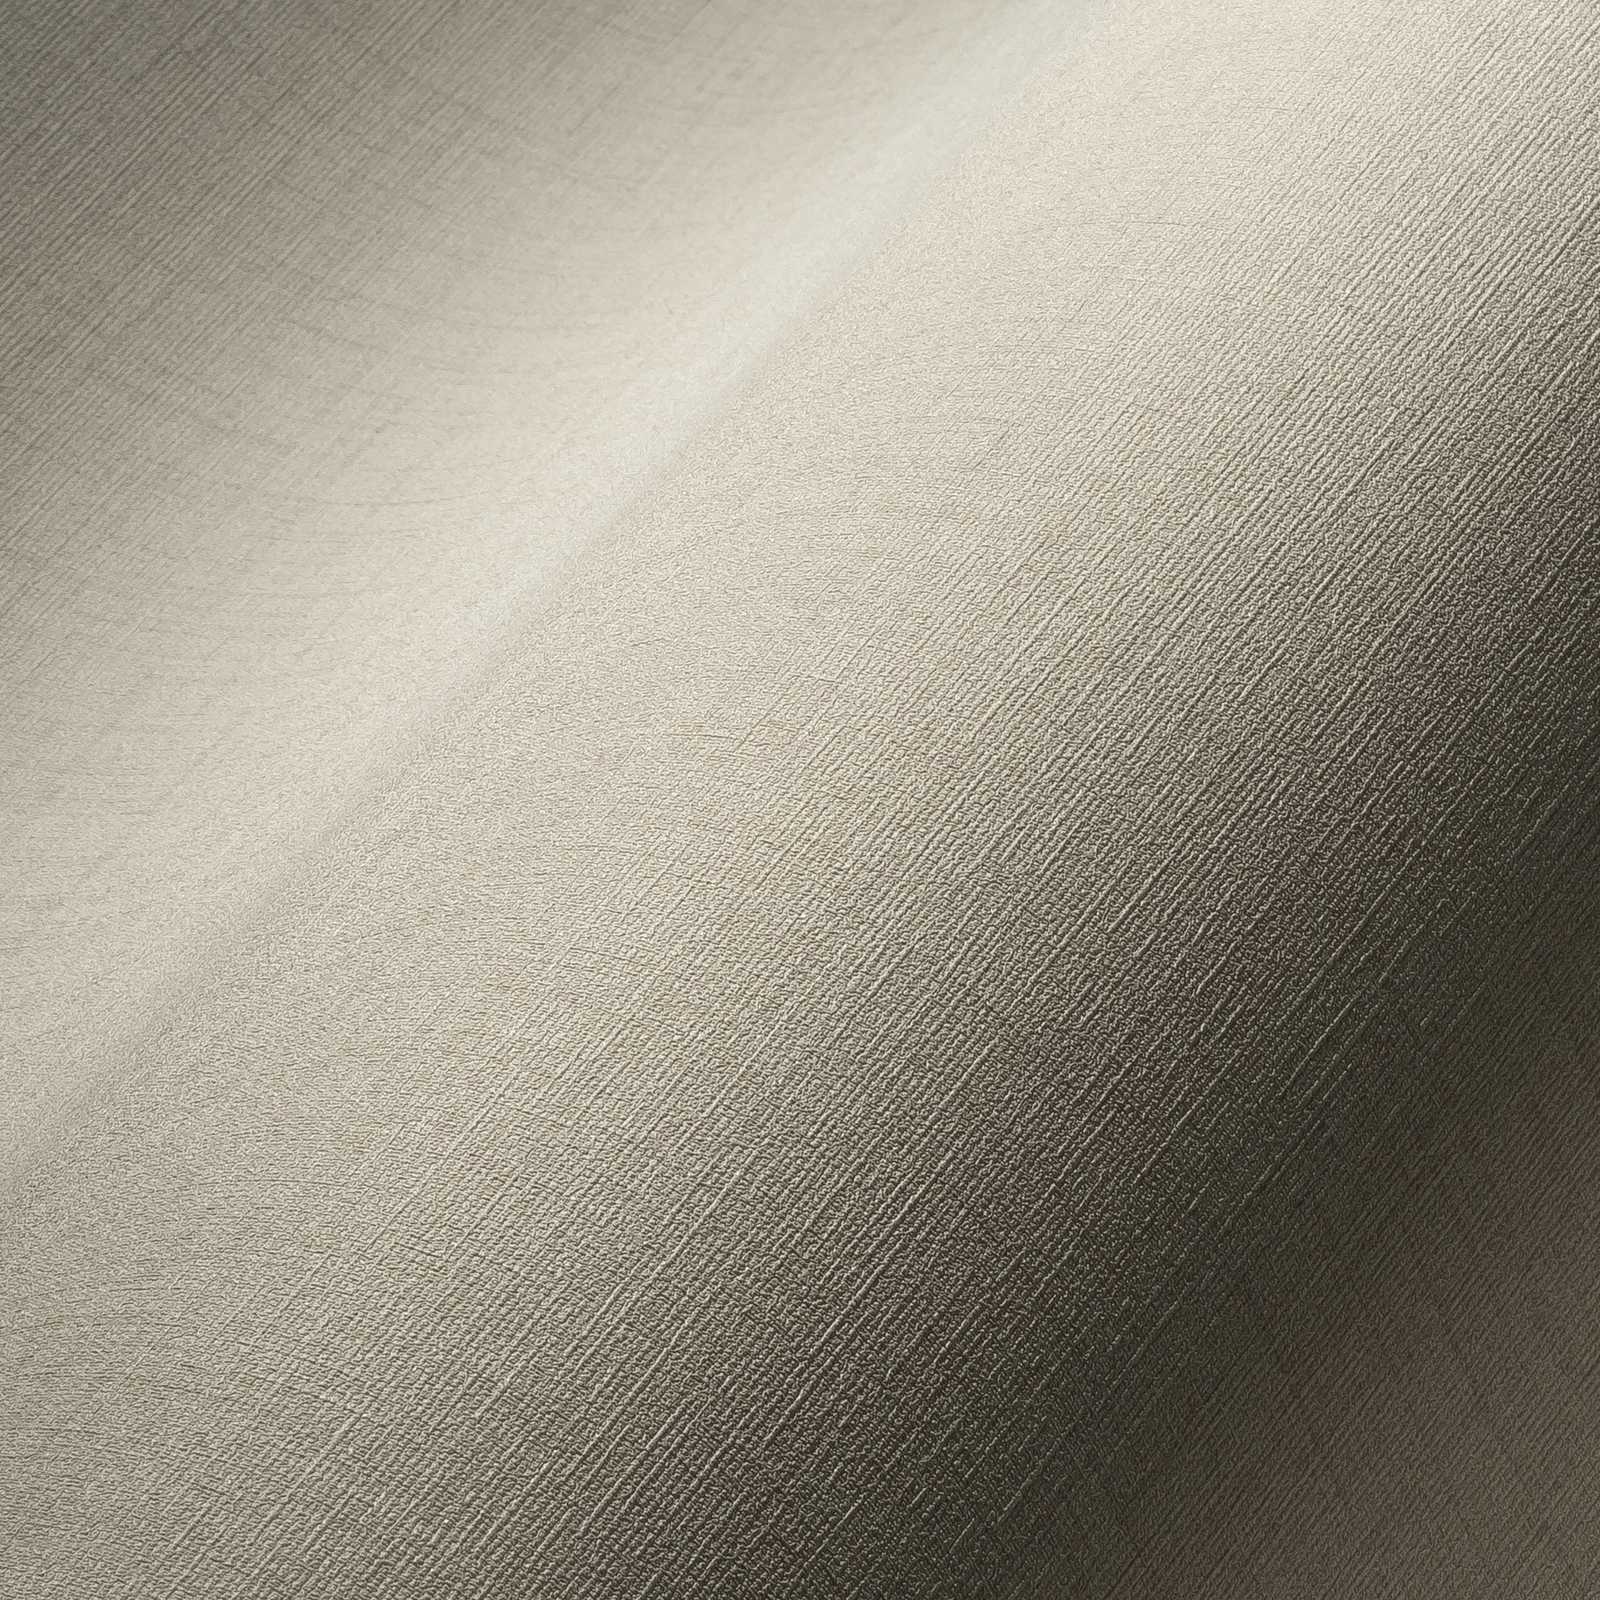             papel pintado liso beige con estructura textil - gris
        